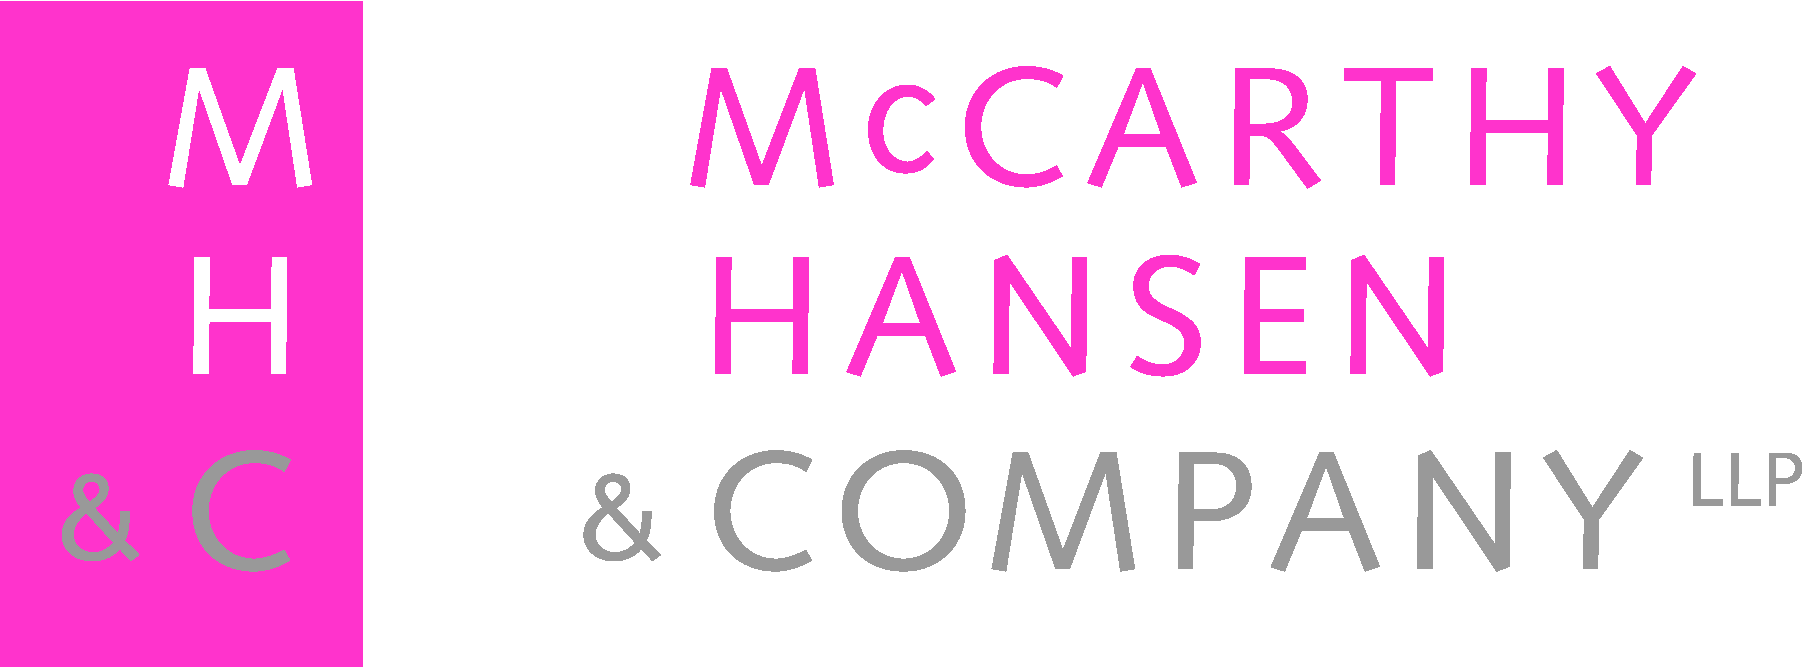 McCarthy Hansen & Company LLP